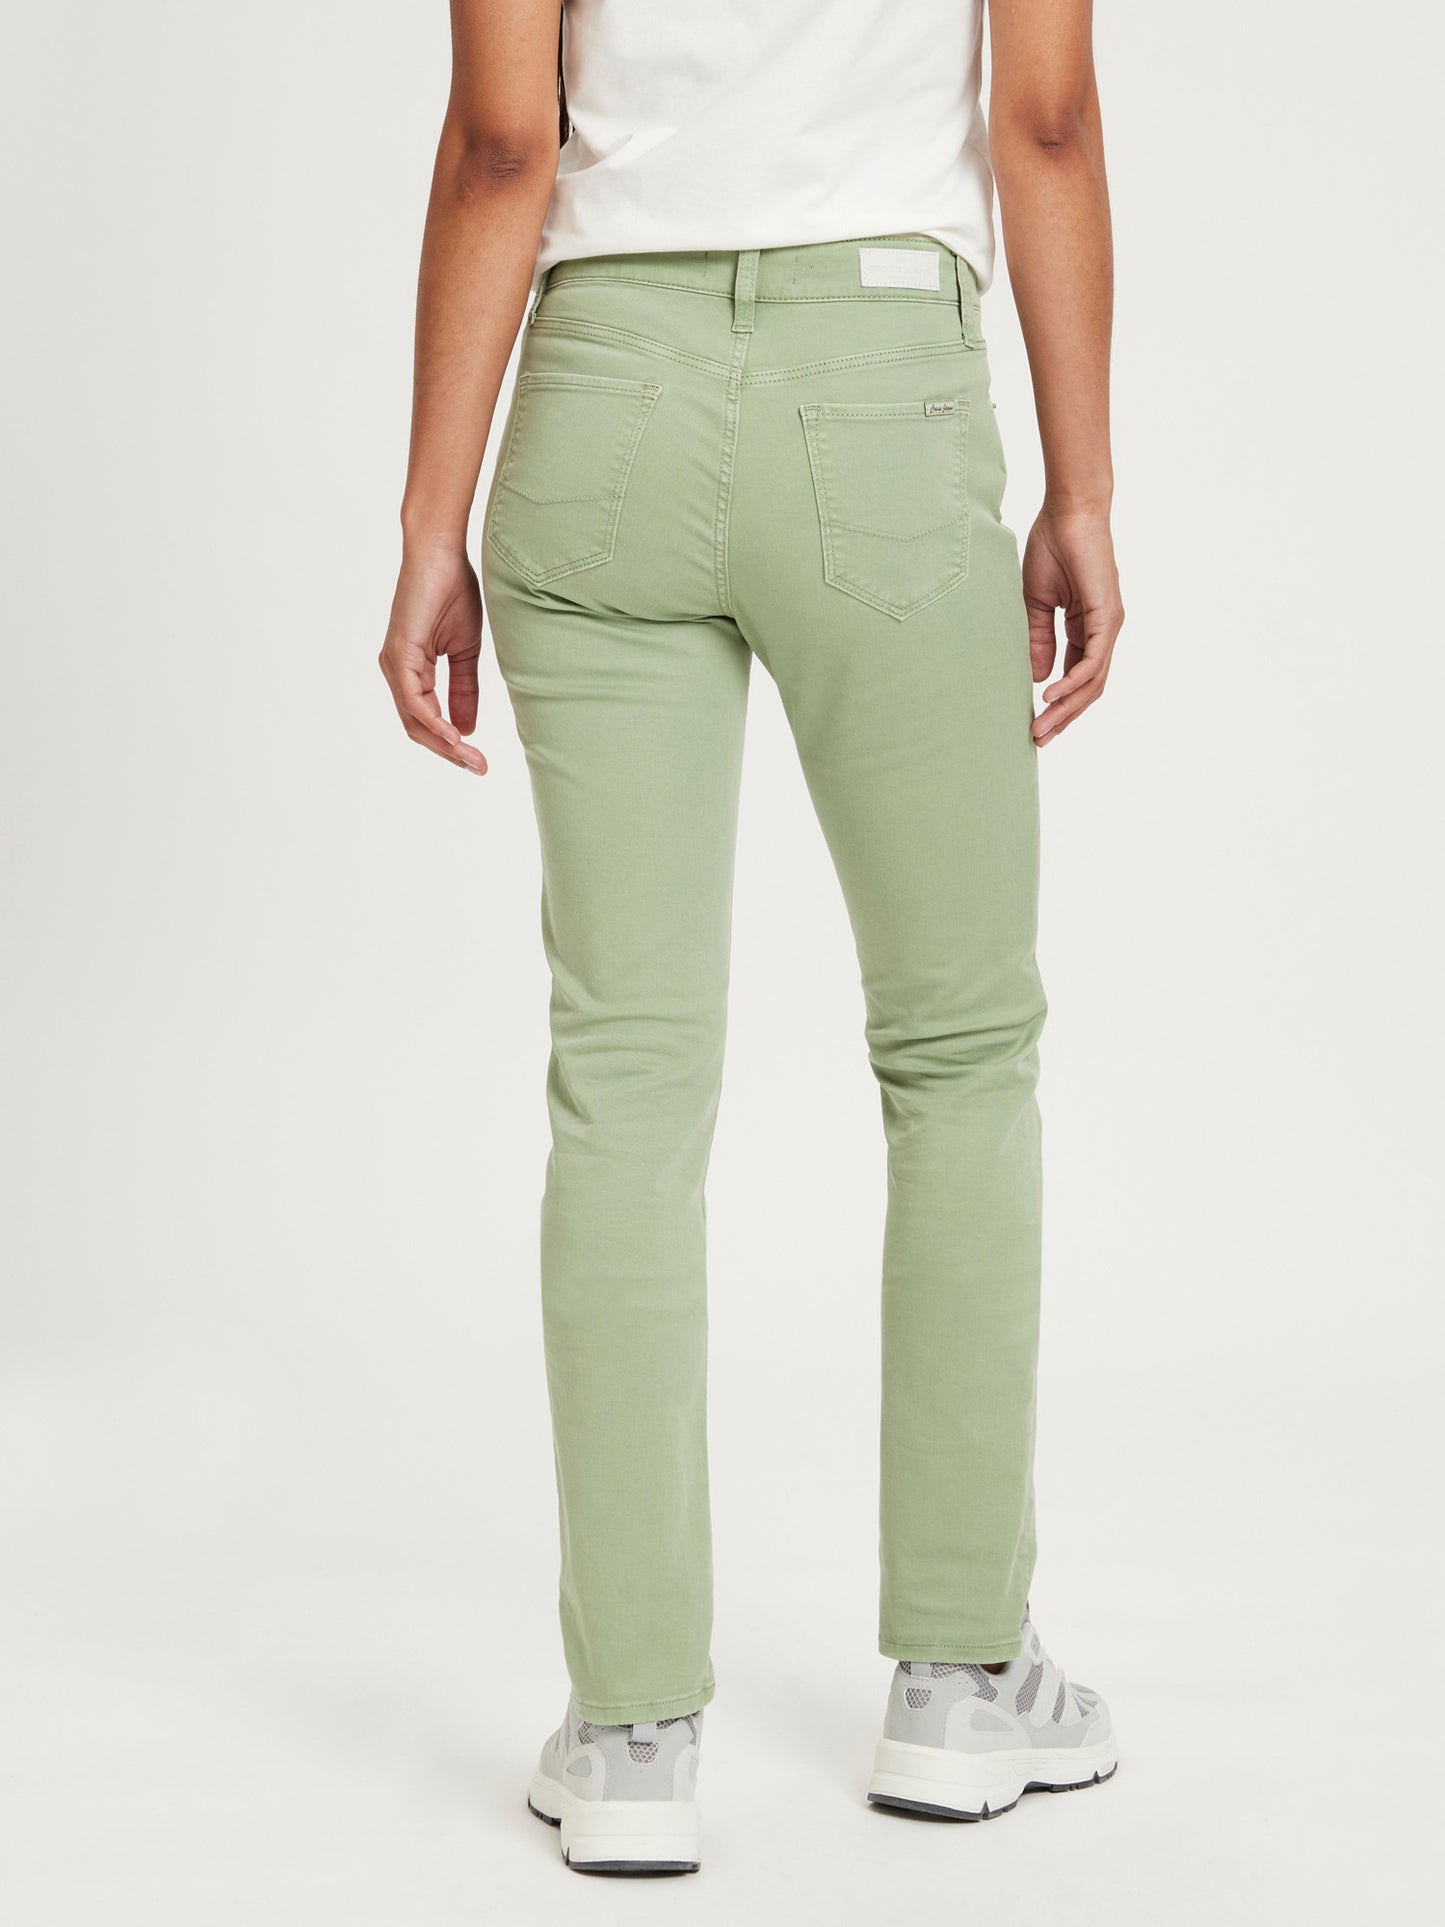 Anya women's jeans slim fit high waist mint